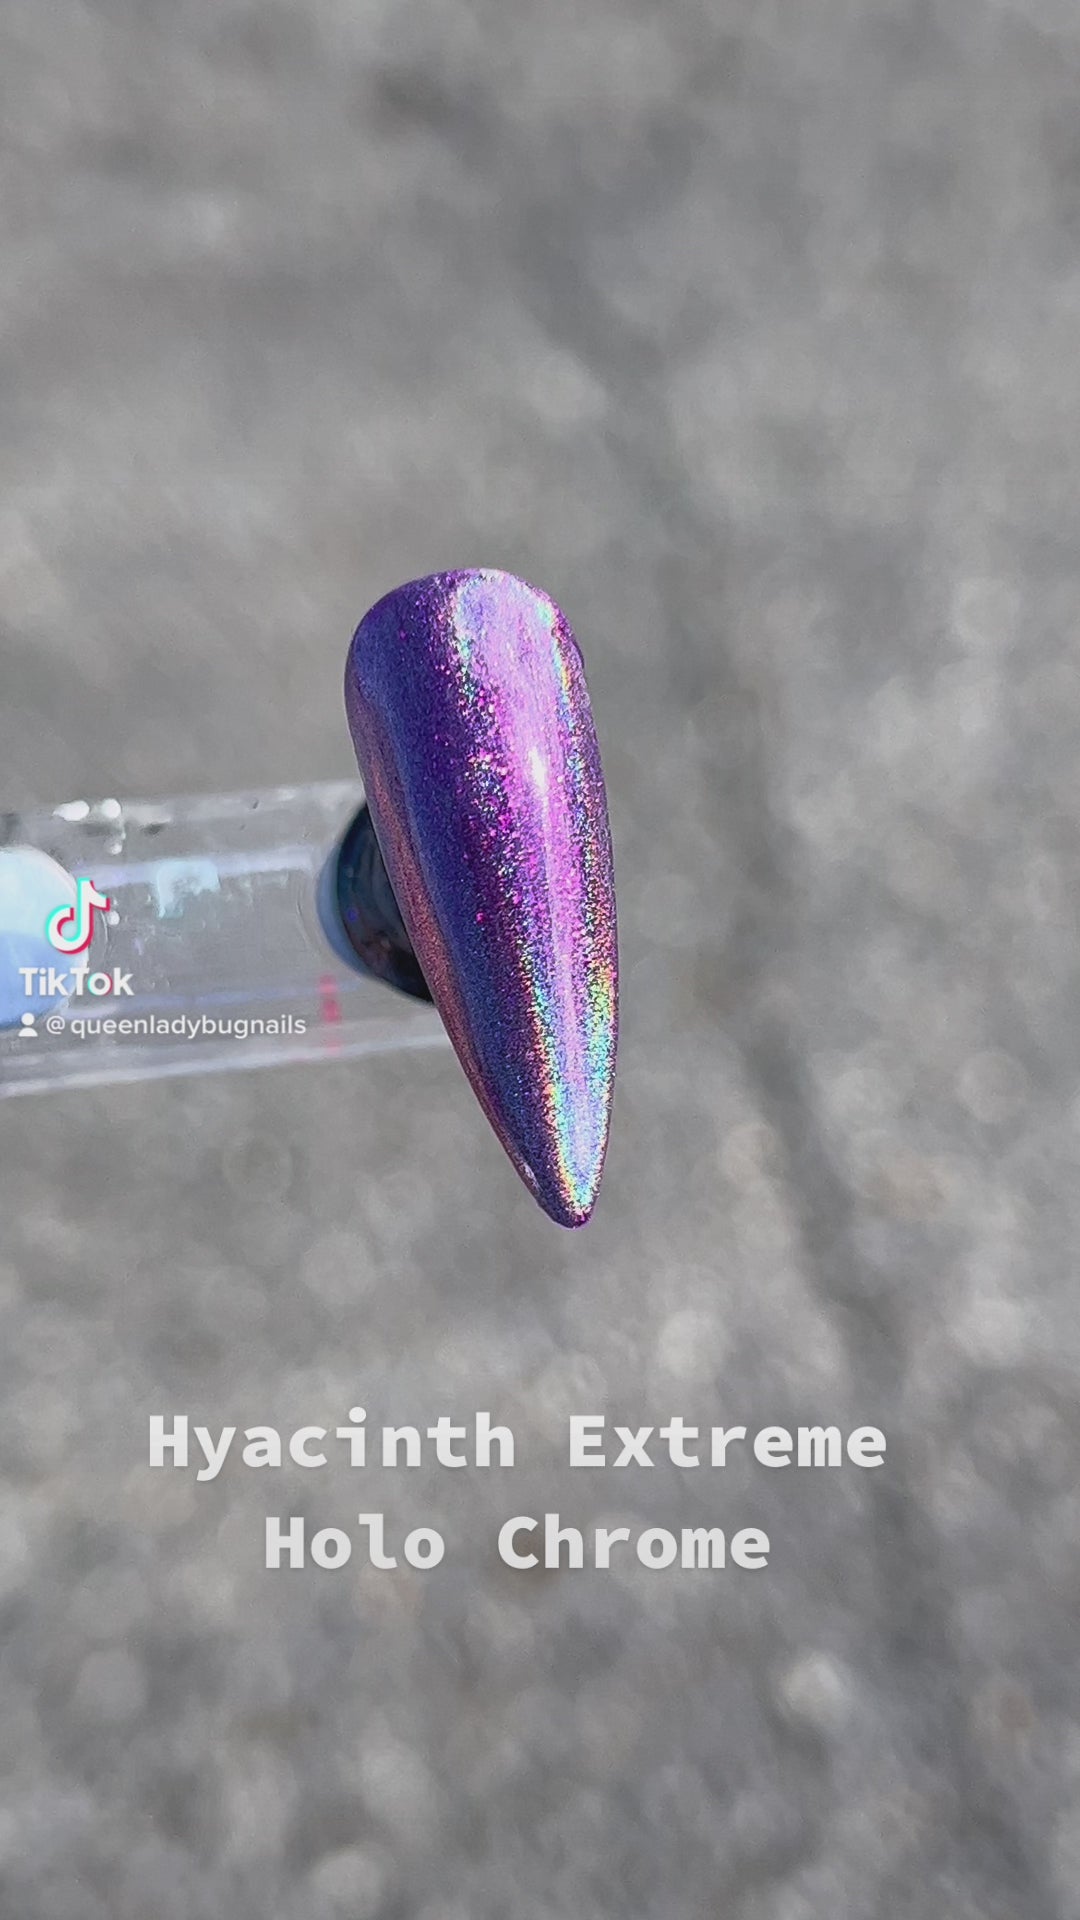 Hyacinth Extreme Halo Chrome